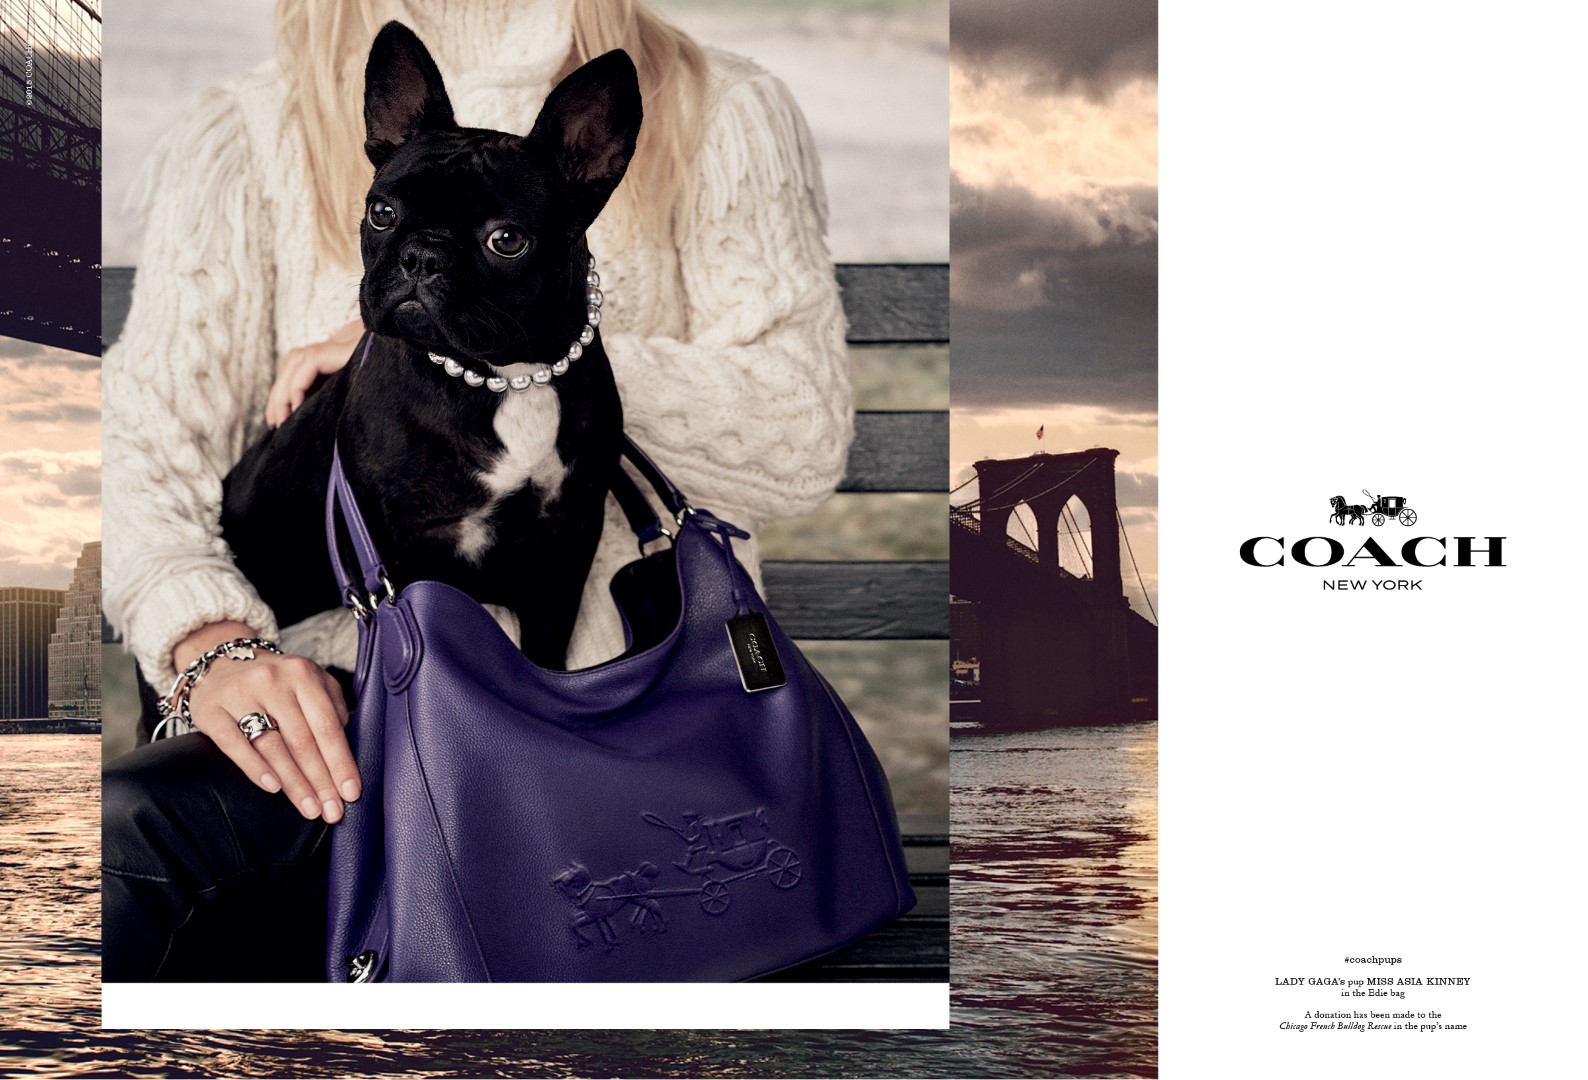 Coach campagna pubblicitaria: protagonista Miss Asia Kinney, l’amato bull dog francese di Lady Gaga